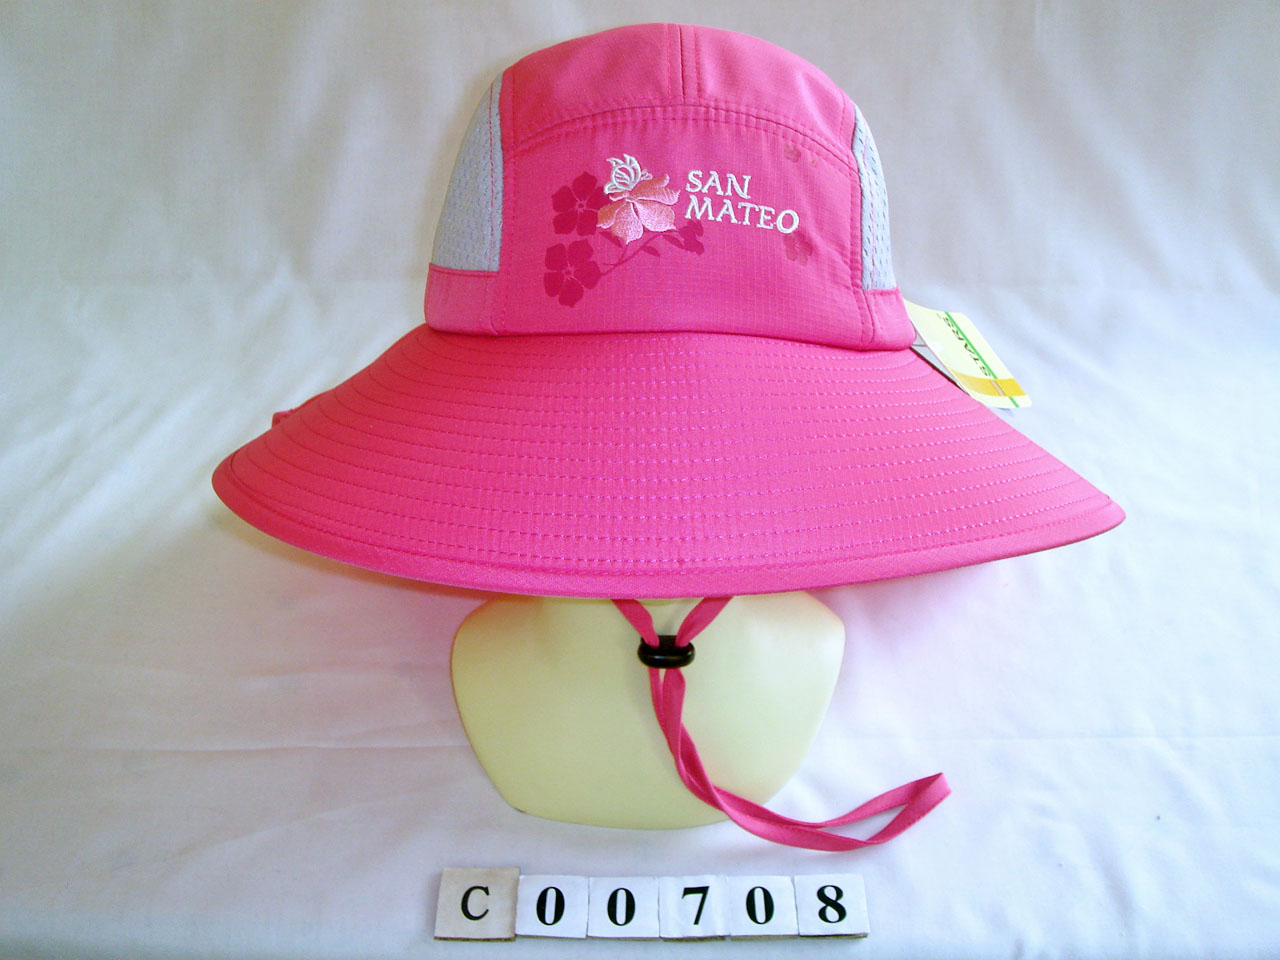 CO0708 桃紅 固定式後披 無前披 格子布五片式休閒帽 電繡花與SAN MATEO 三星製帽